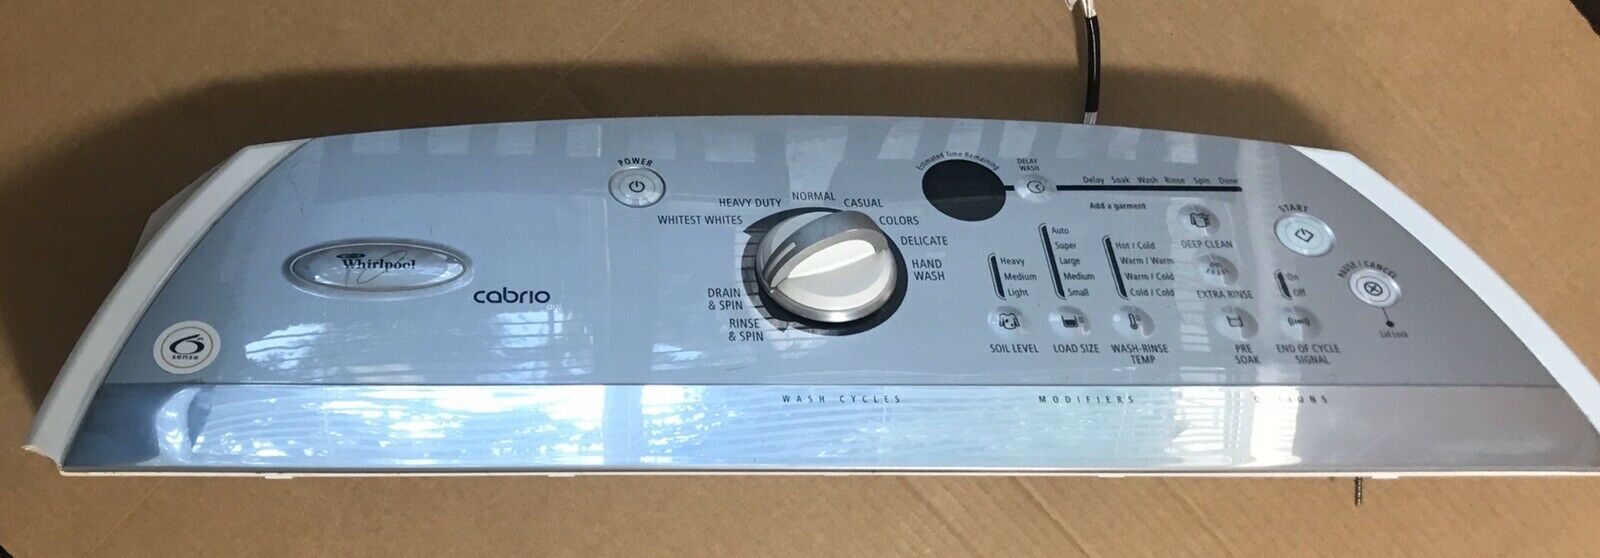 Whirlpool Cabrio Agi Washer Console & Main Control Board P/N:8563950 W10121508